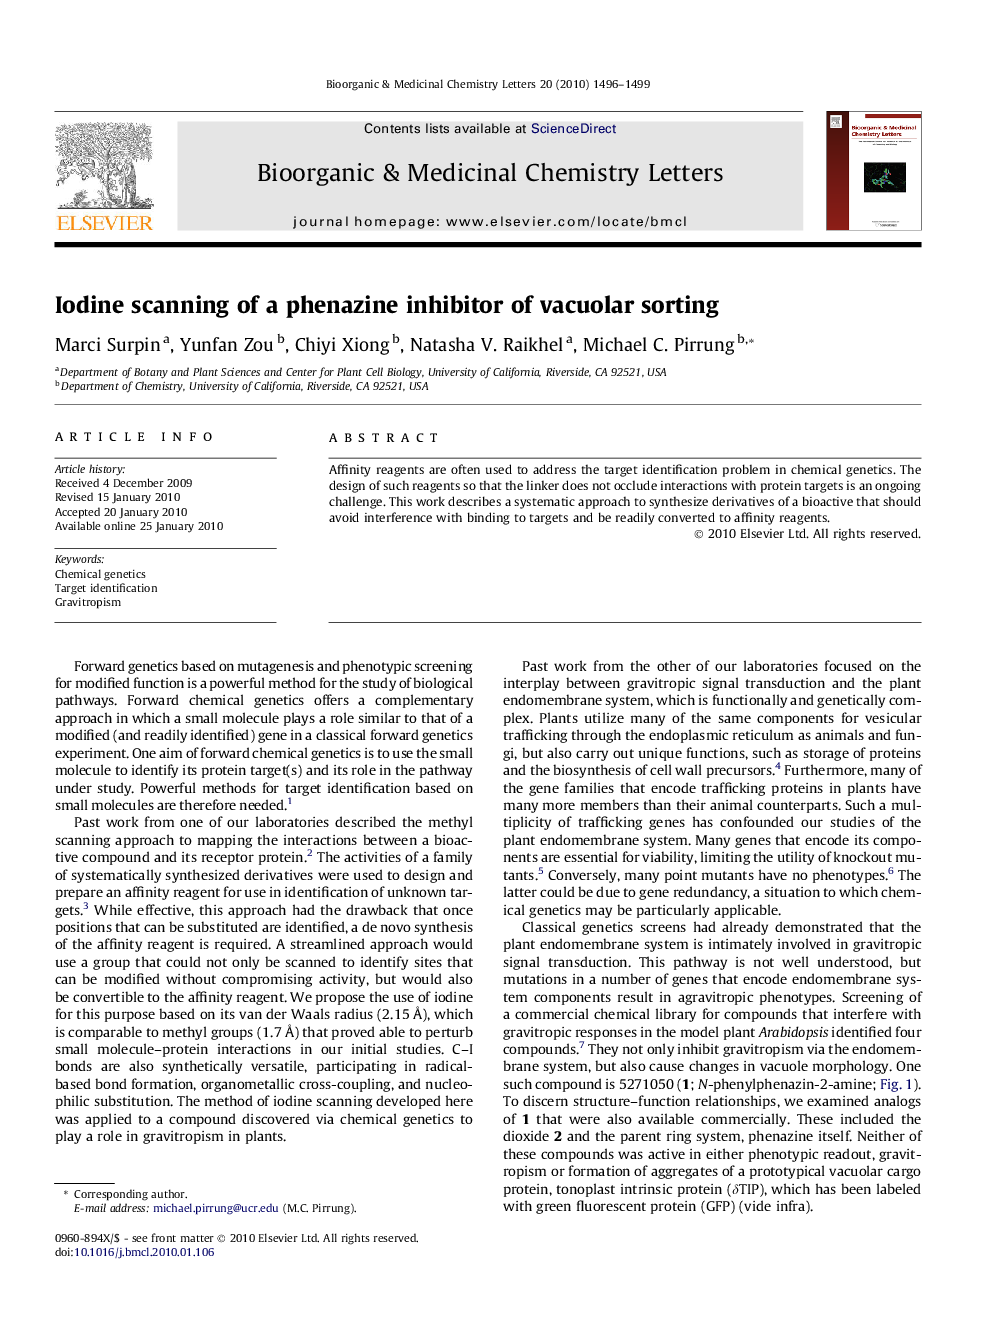 Iodine scanning of a phenazine inhibitor of vacuolar sorting